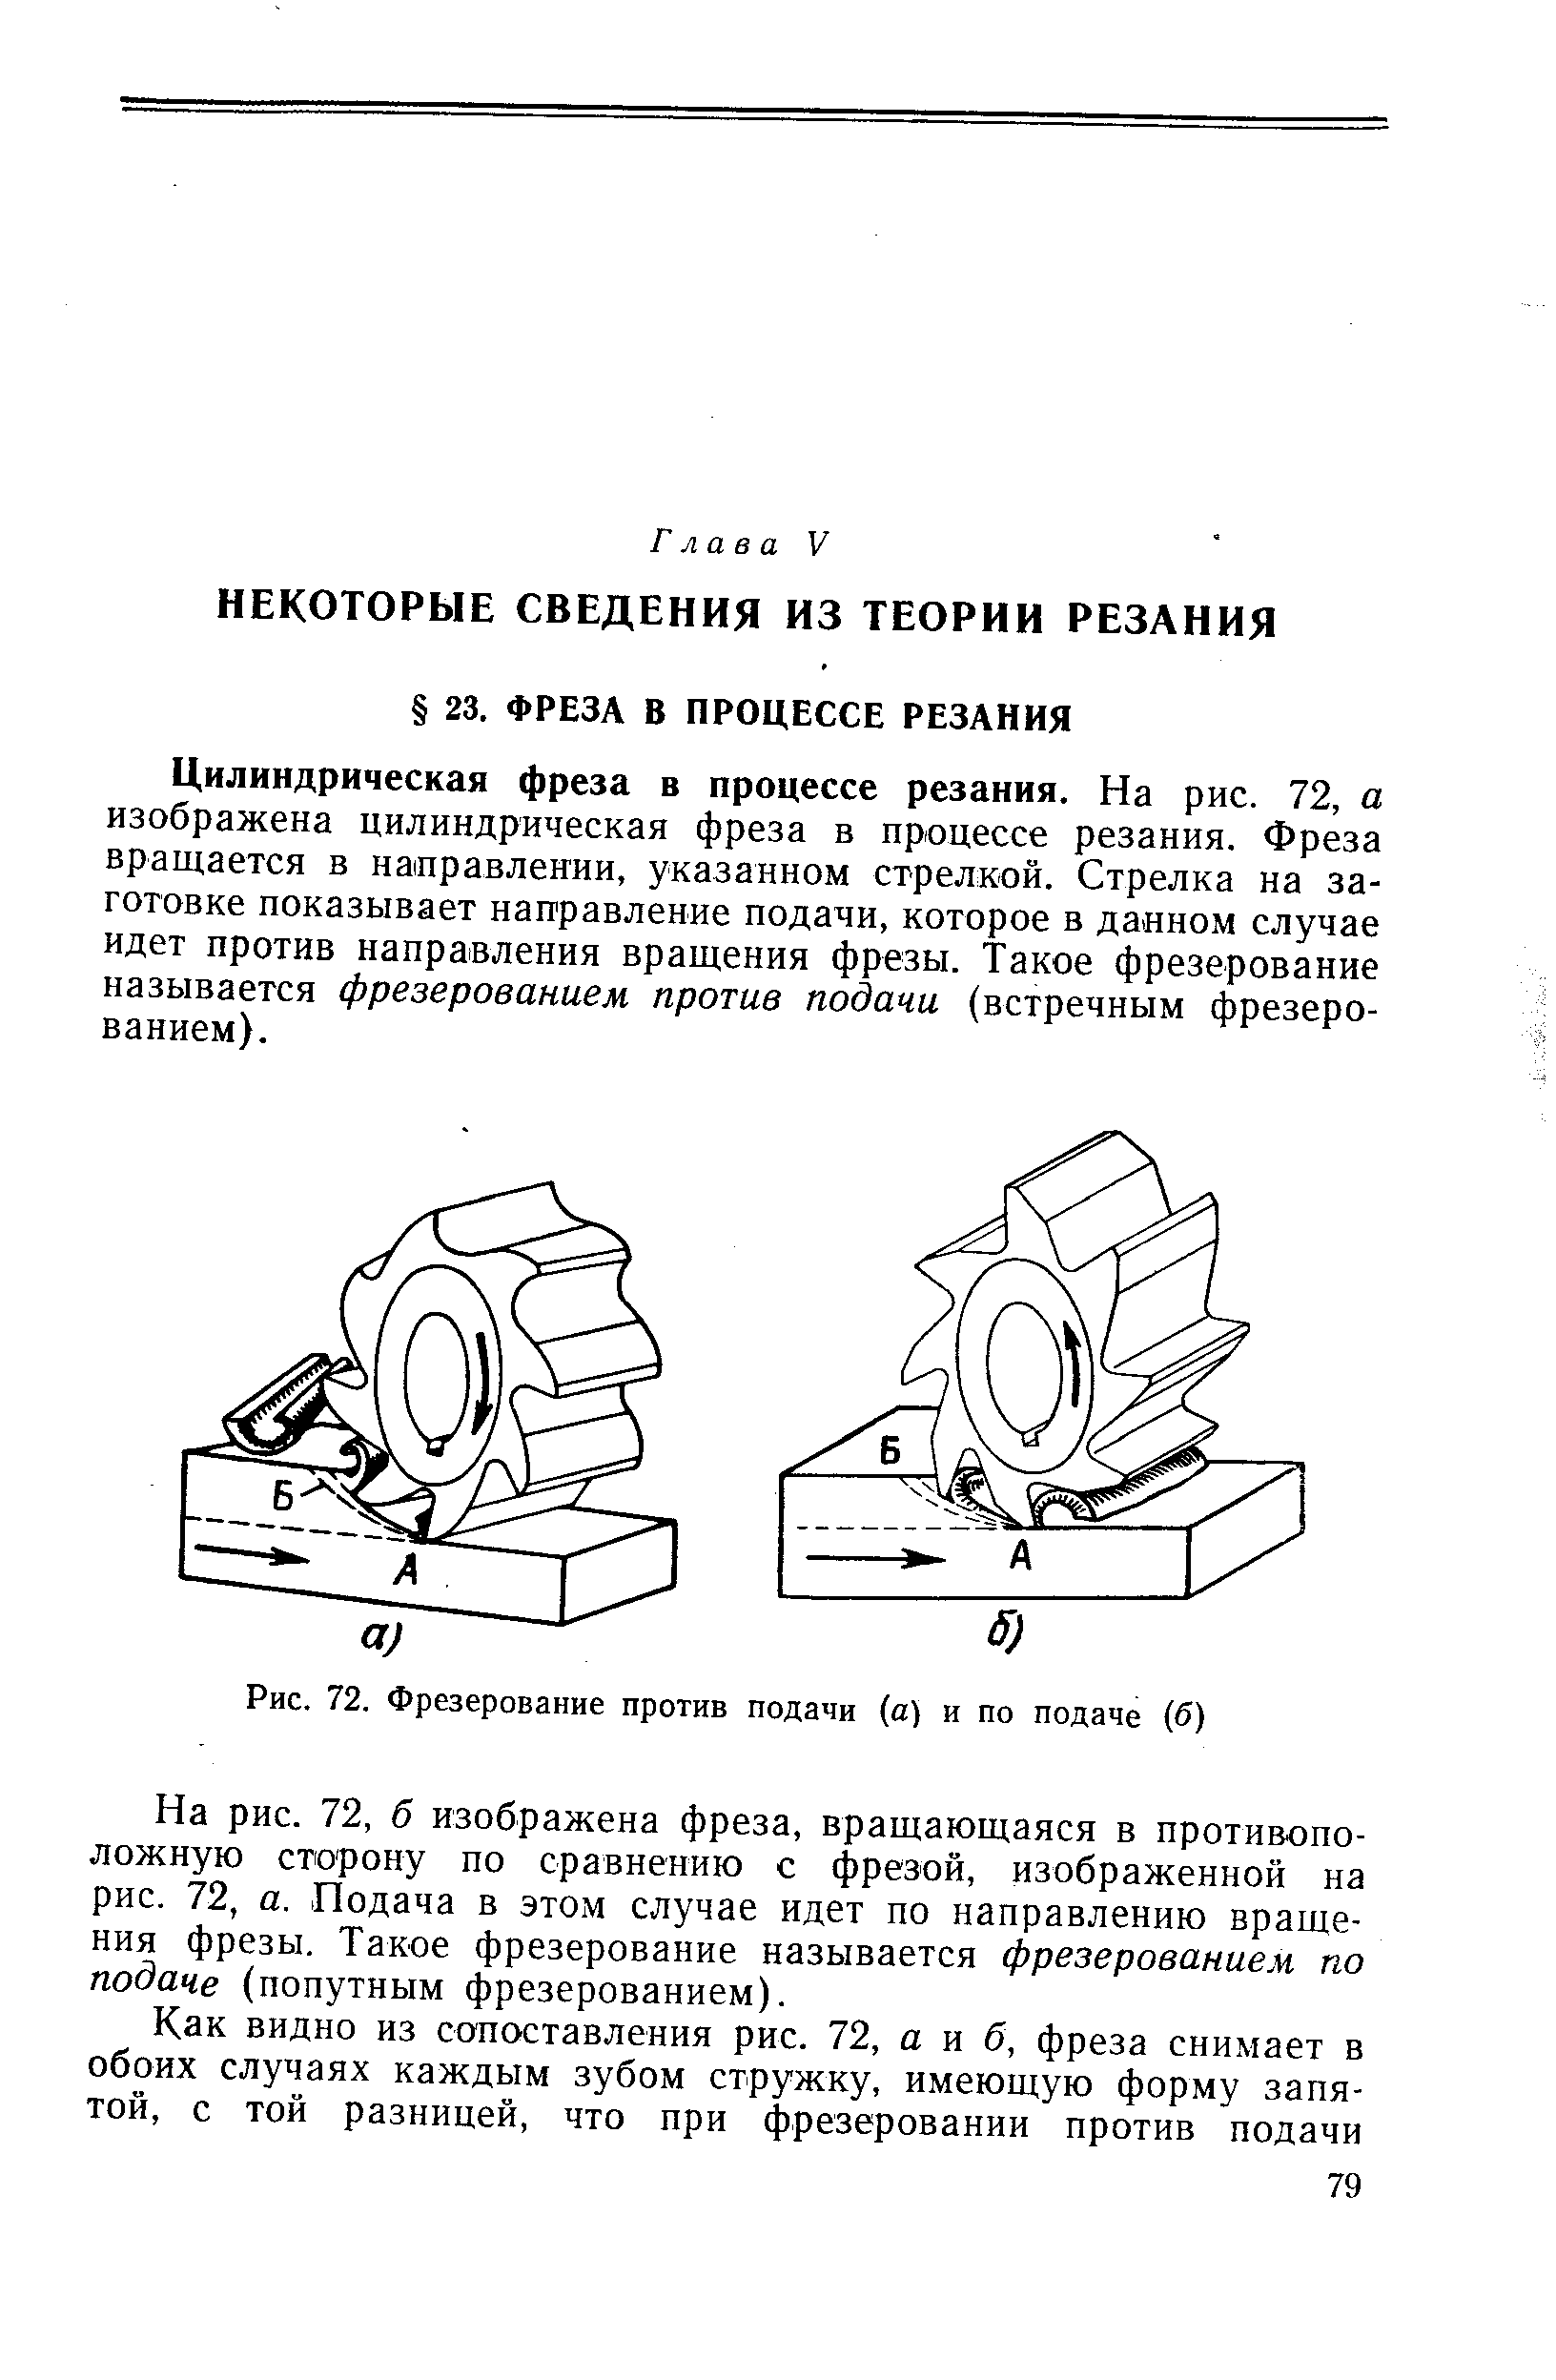 Рис. 72. Фрезерование против подачи (а) и по подаче (б)
